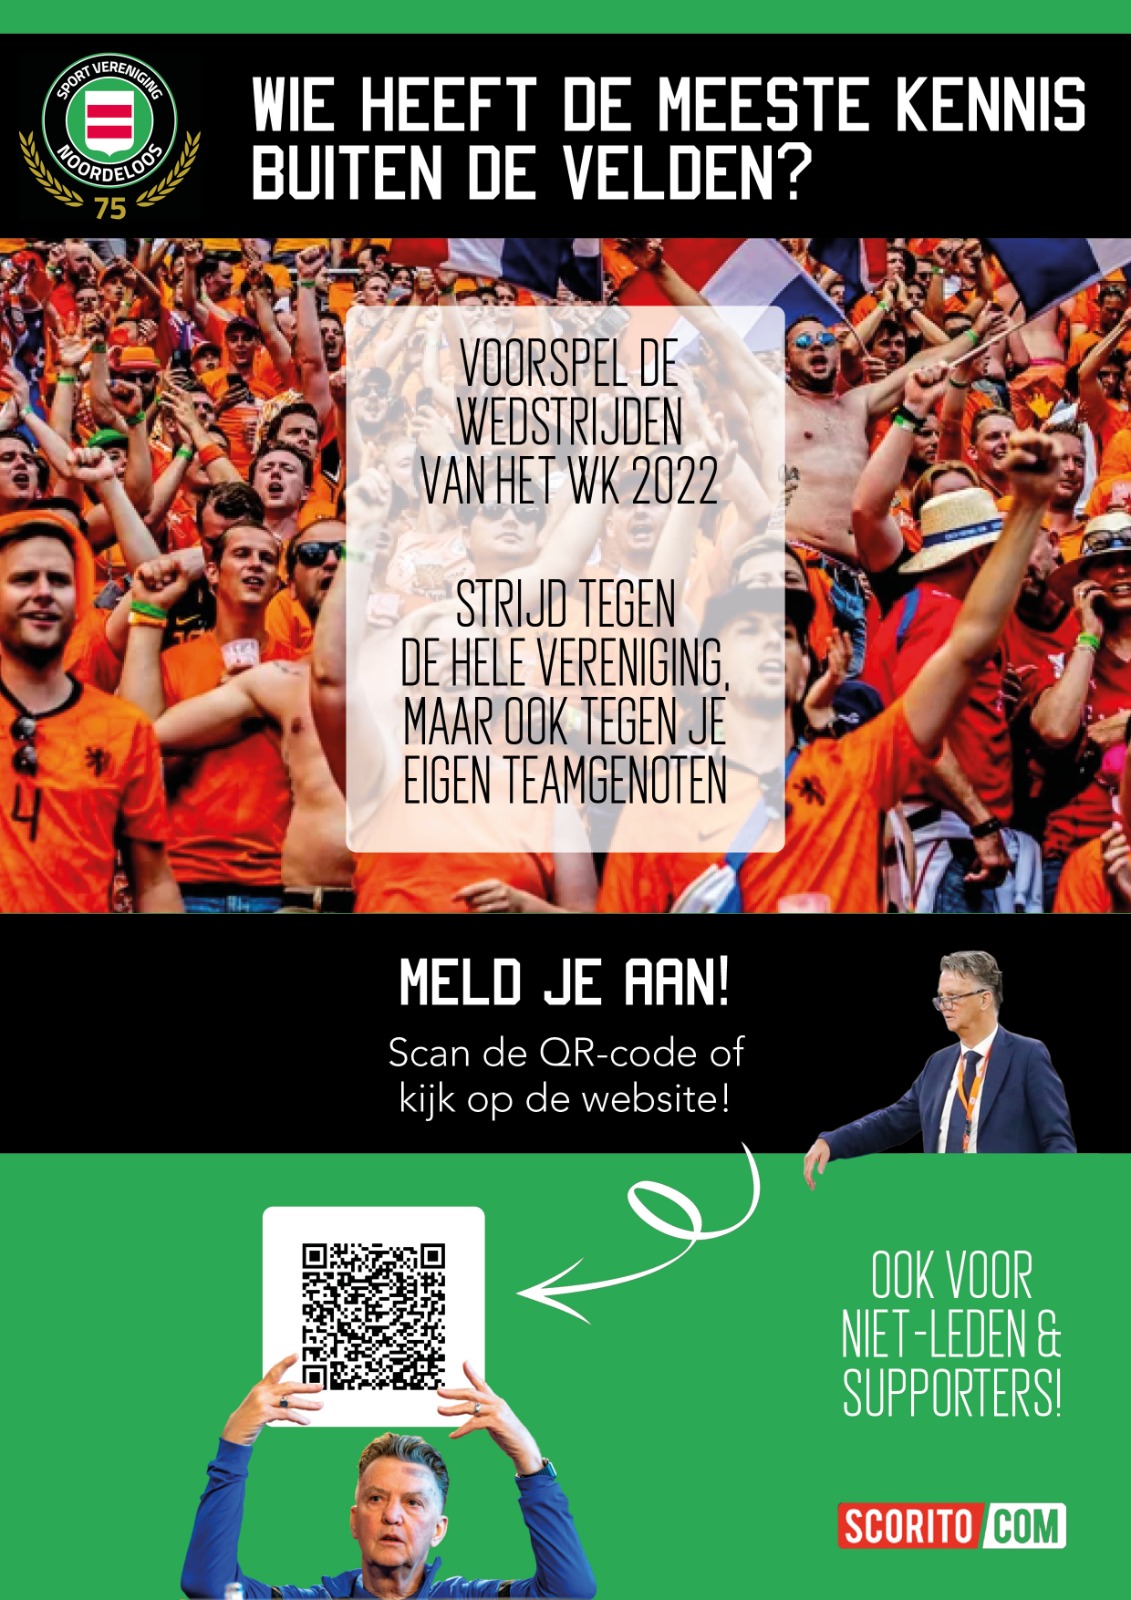 Doe mee met de WK poule van SV Noordeloos!